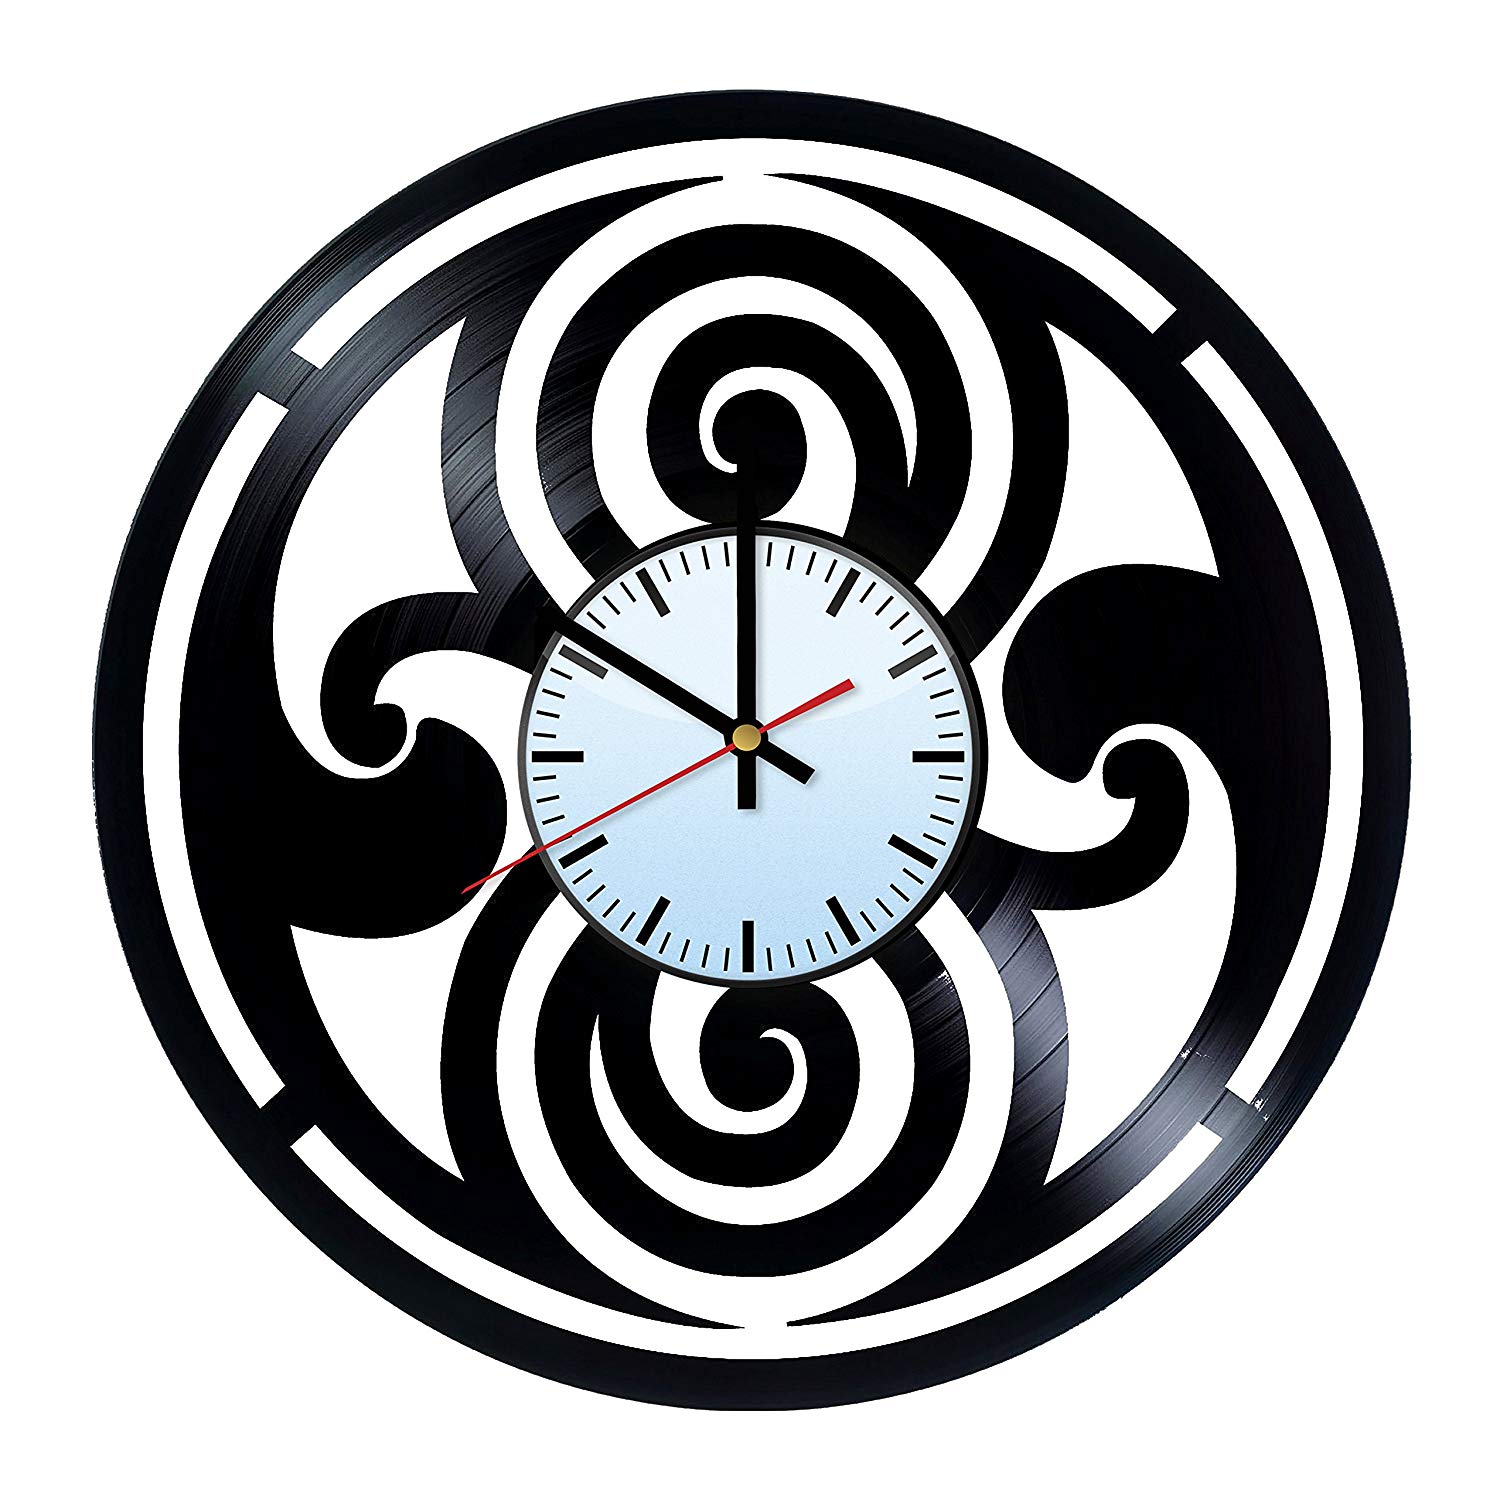 Strange Logo - Baden Baden Doctor Strange Logo Vinyl Record Wall Clock